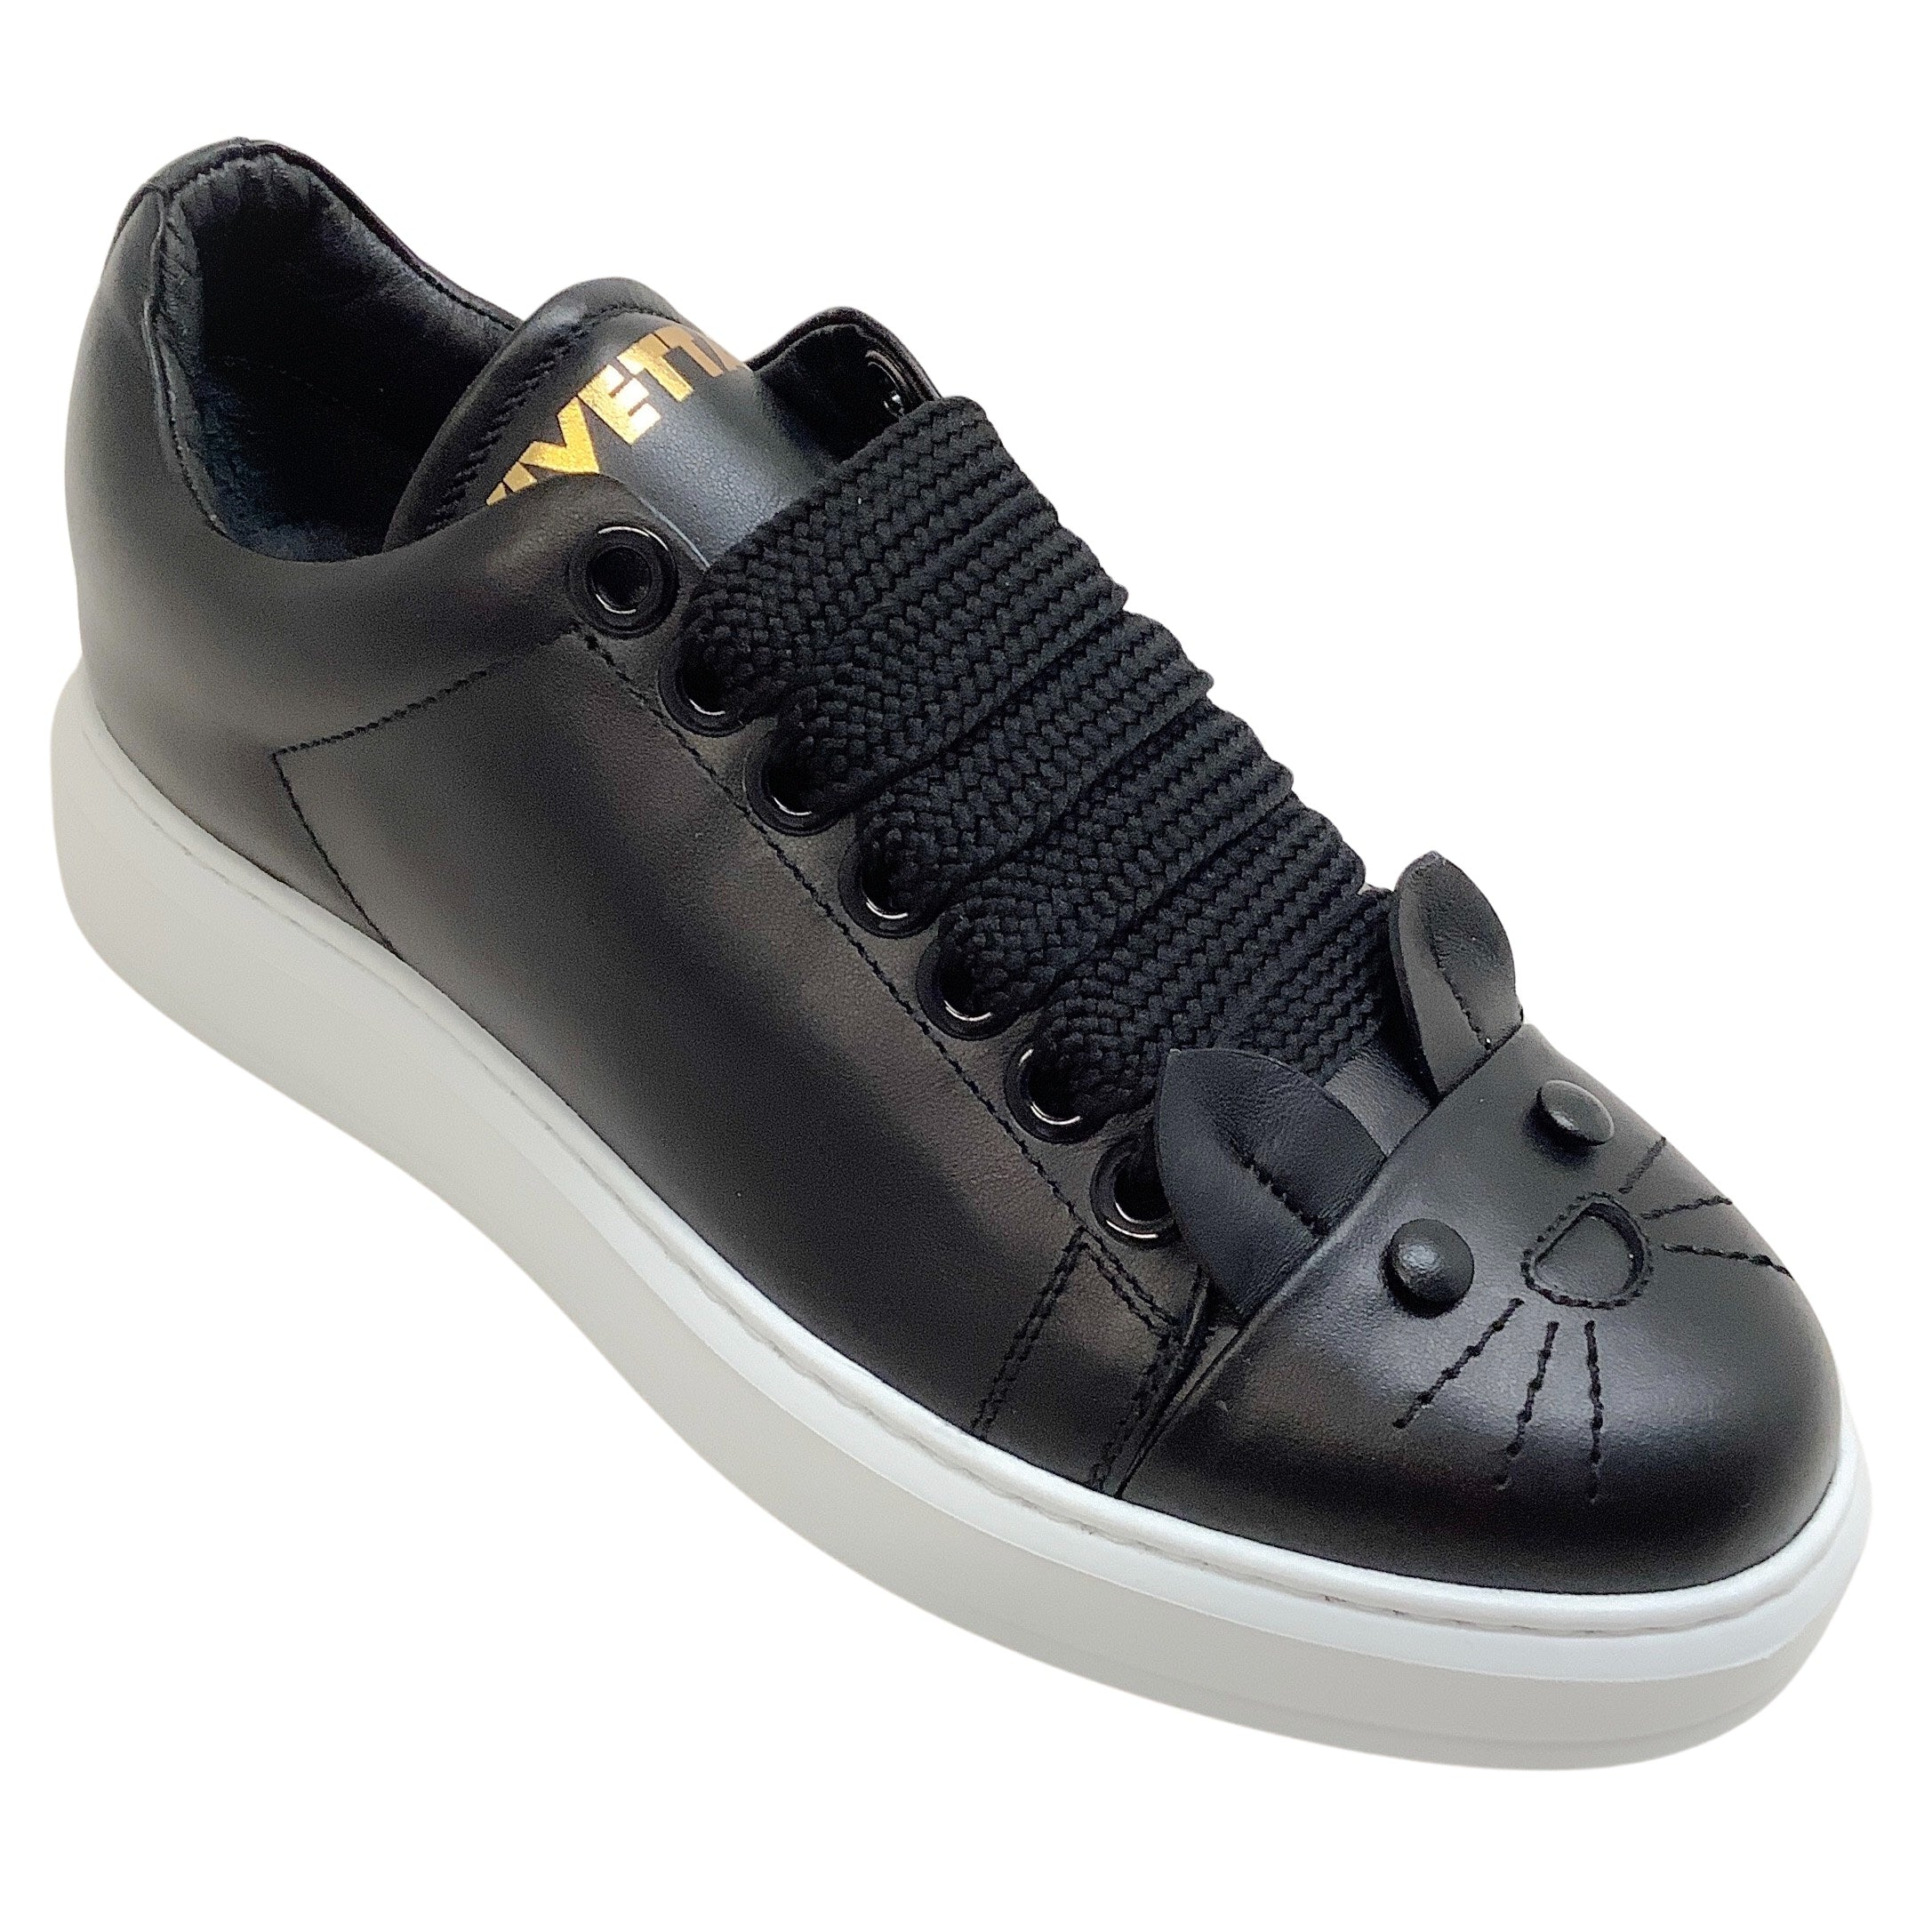 Vivetta Black Leather Cat Sneakers